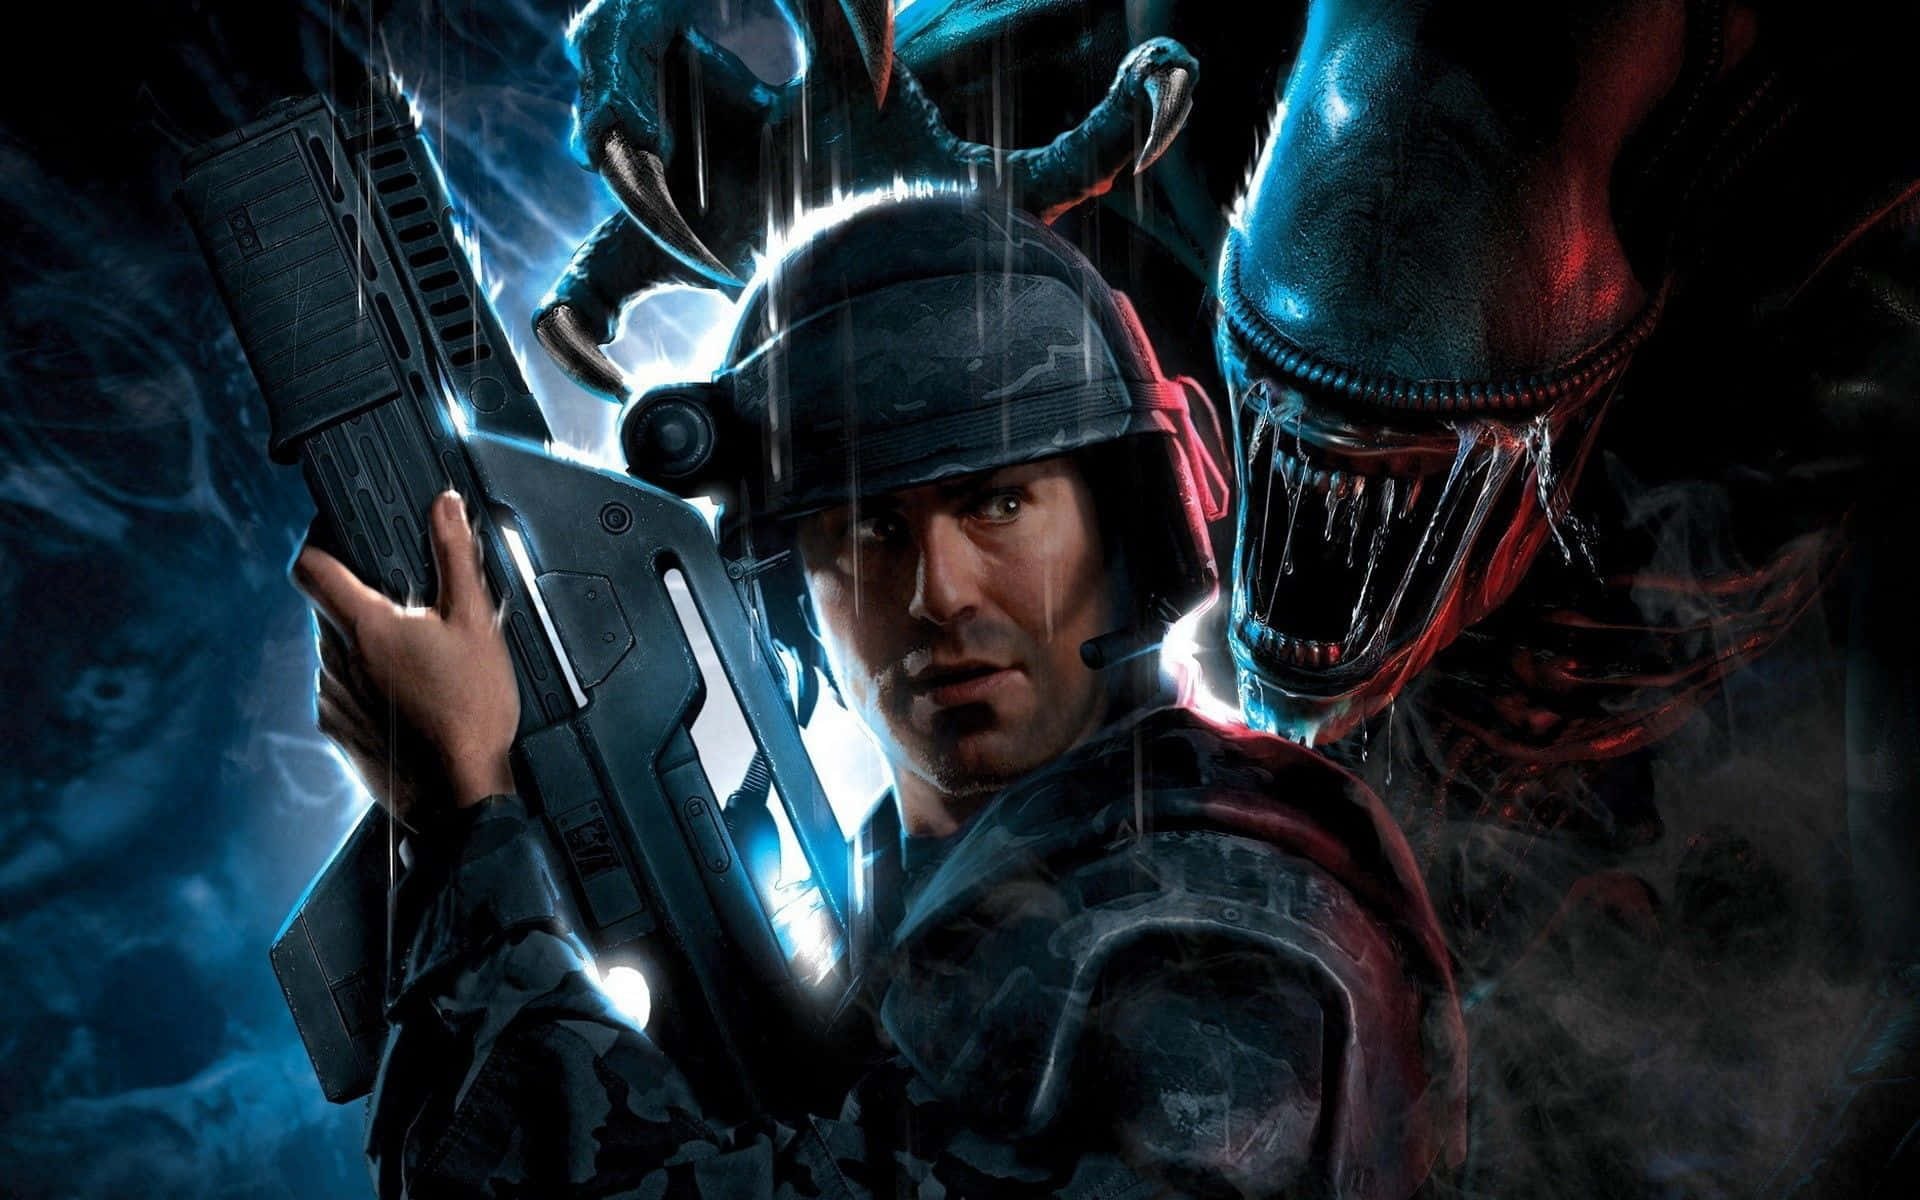 Video Game Aliens Versus Predator 2 HD Wallpaper